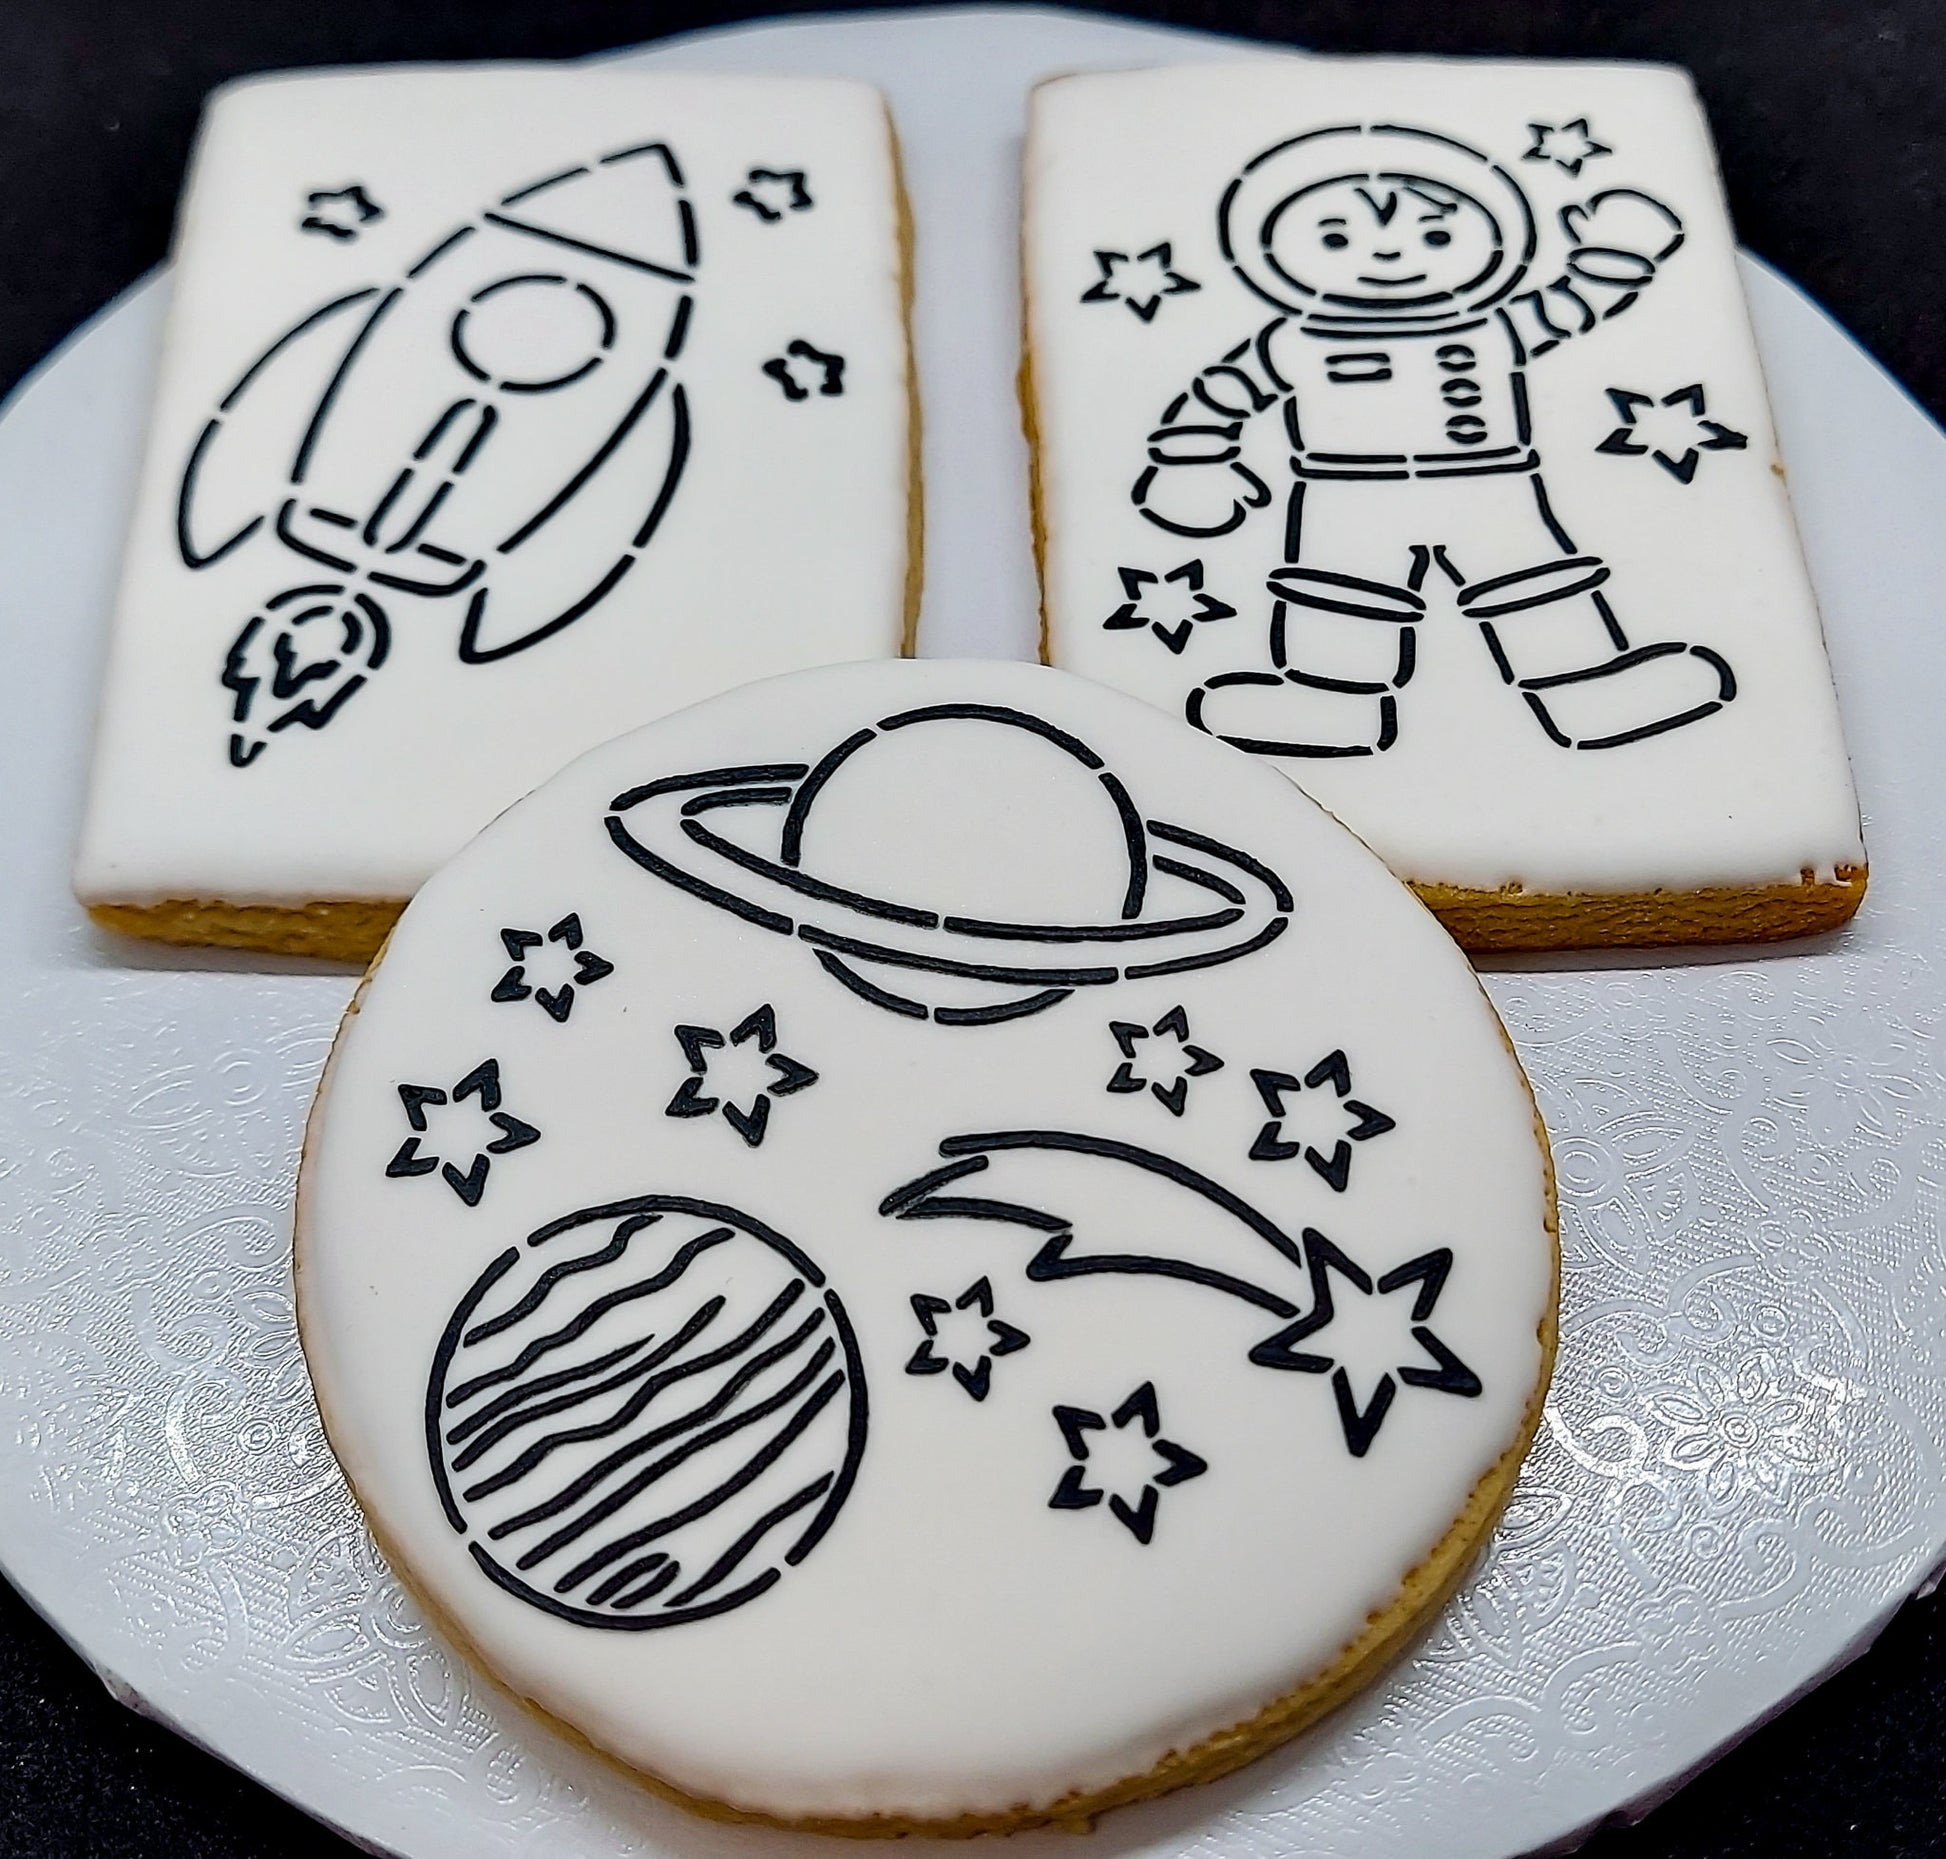 Paint-Your-Own Space Cookies (1 Dozen)